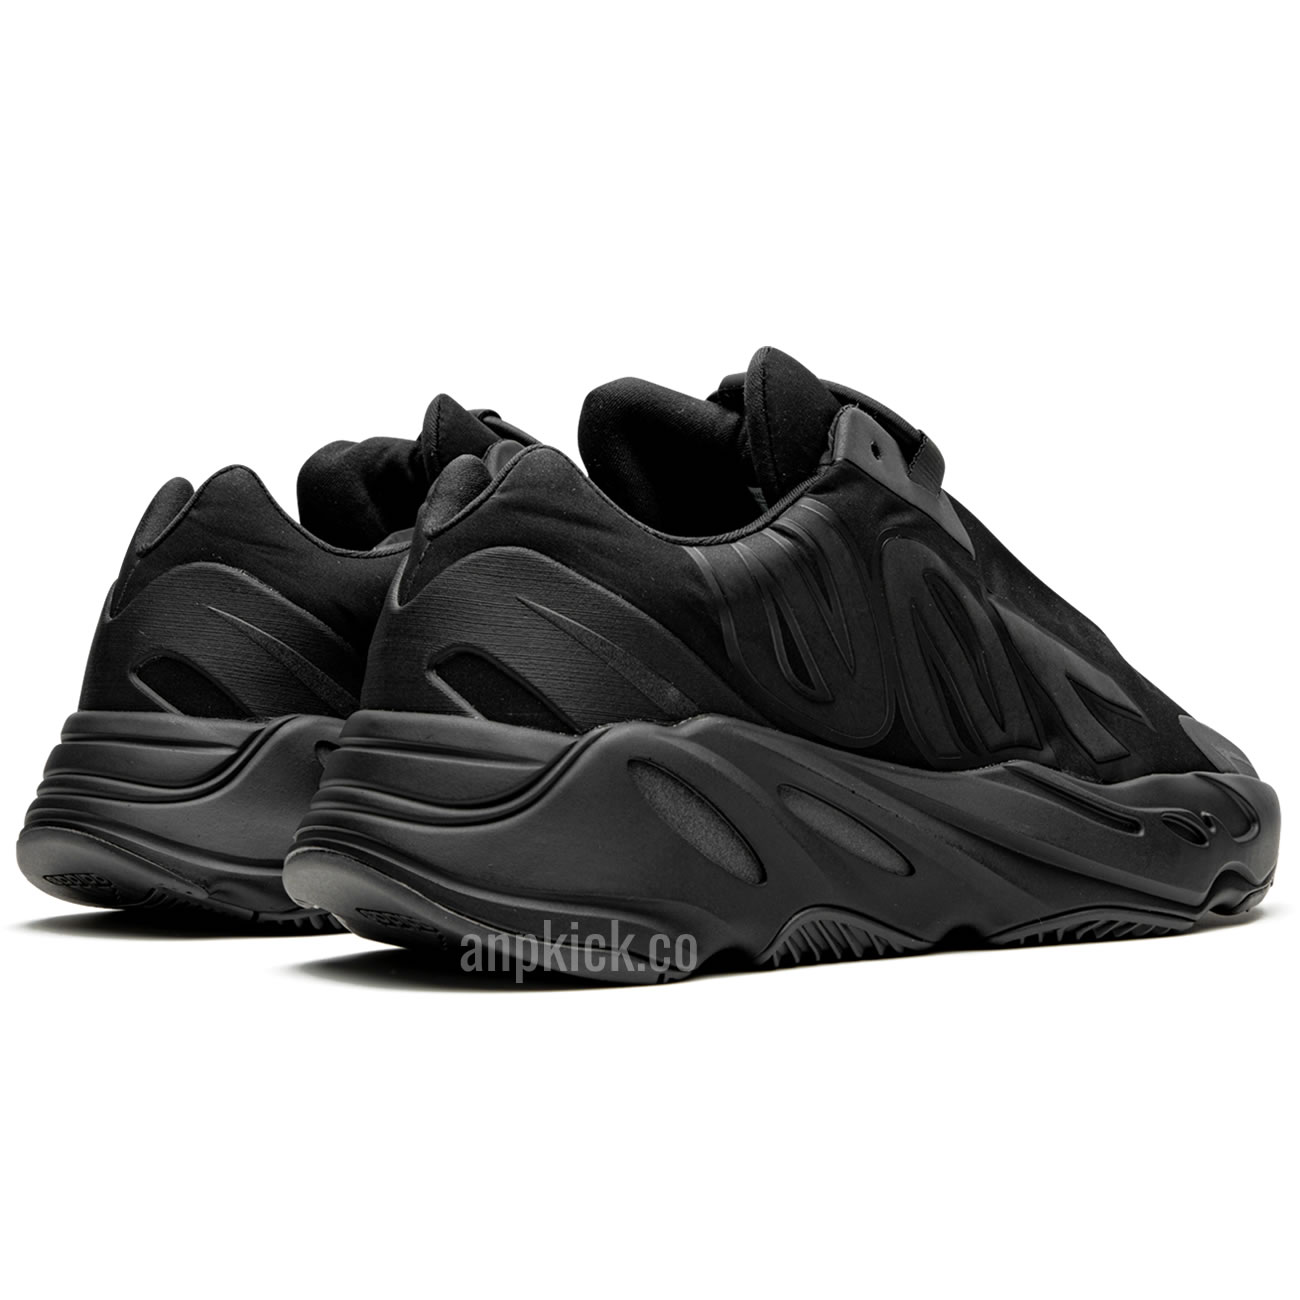 Adidas Yeezy Boost 700 Mnvn Triple Black Fv4440 (4) - newkick.org